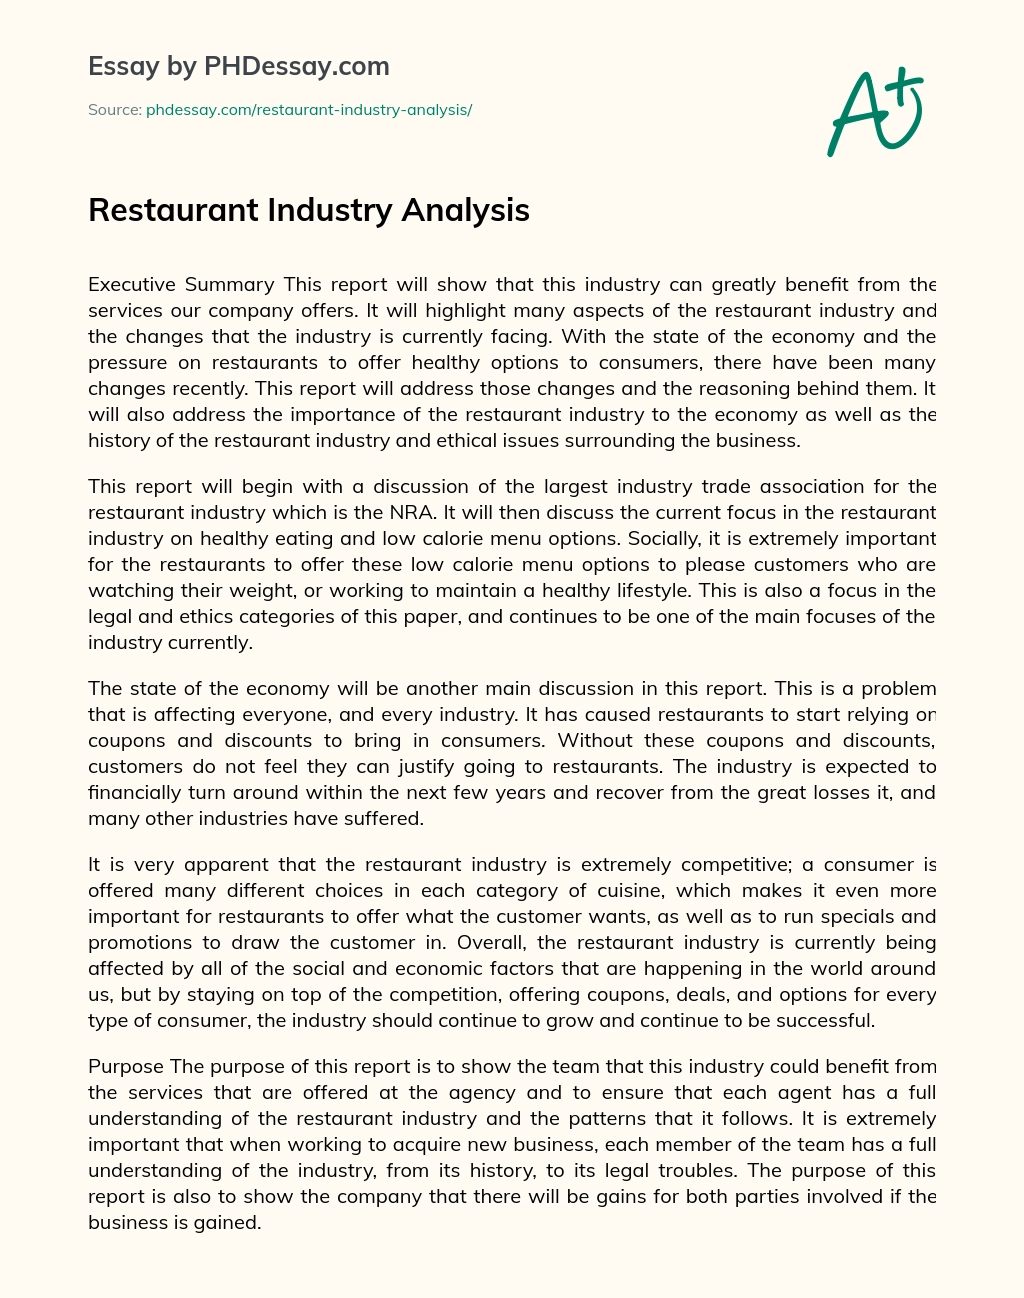 Restaurant Industry Analysis essay